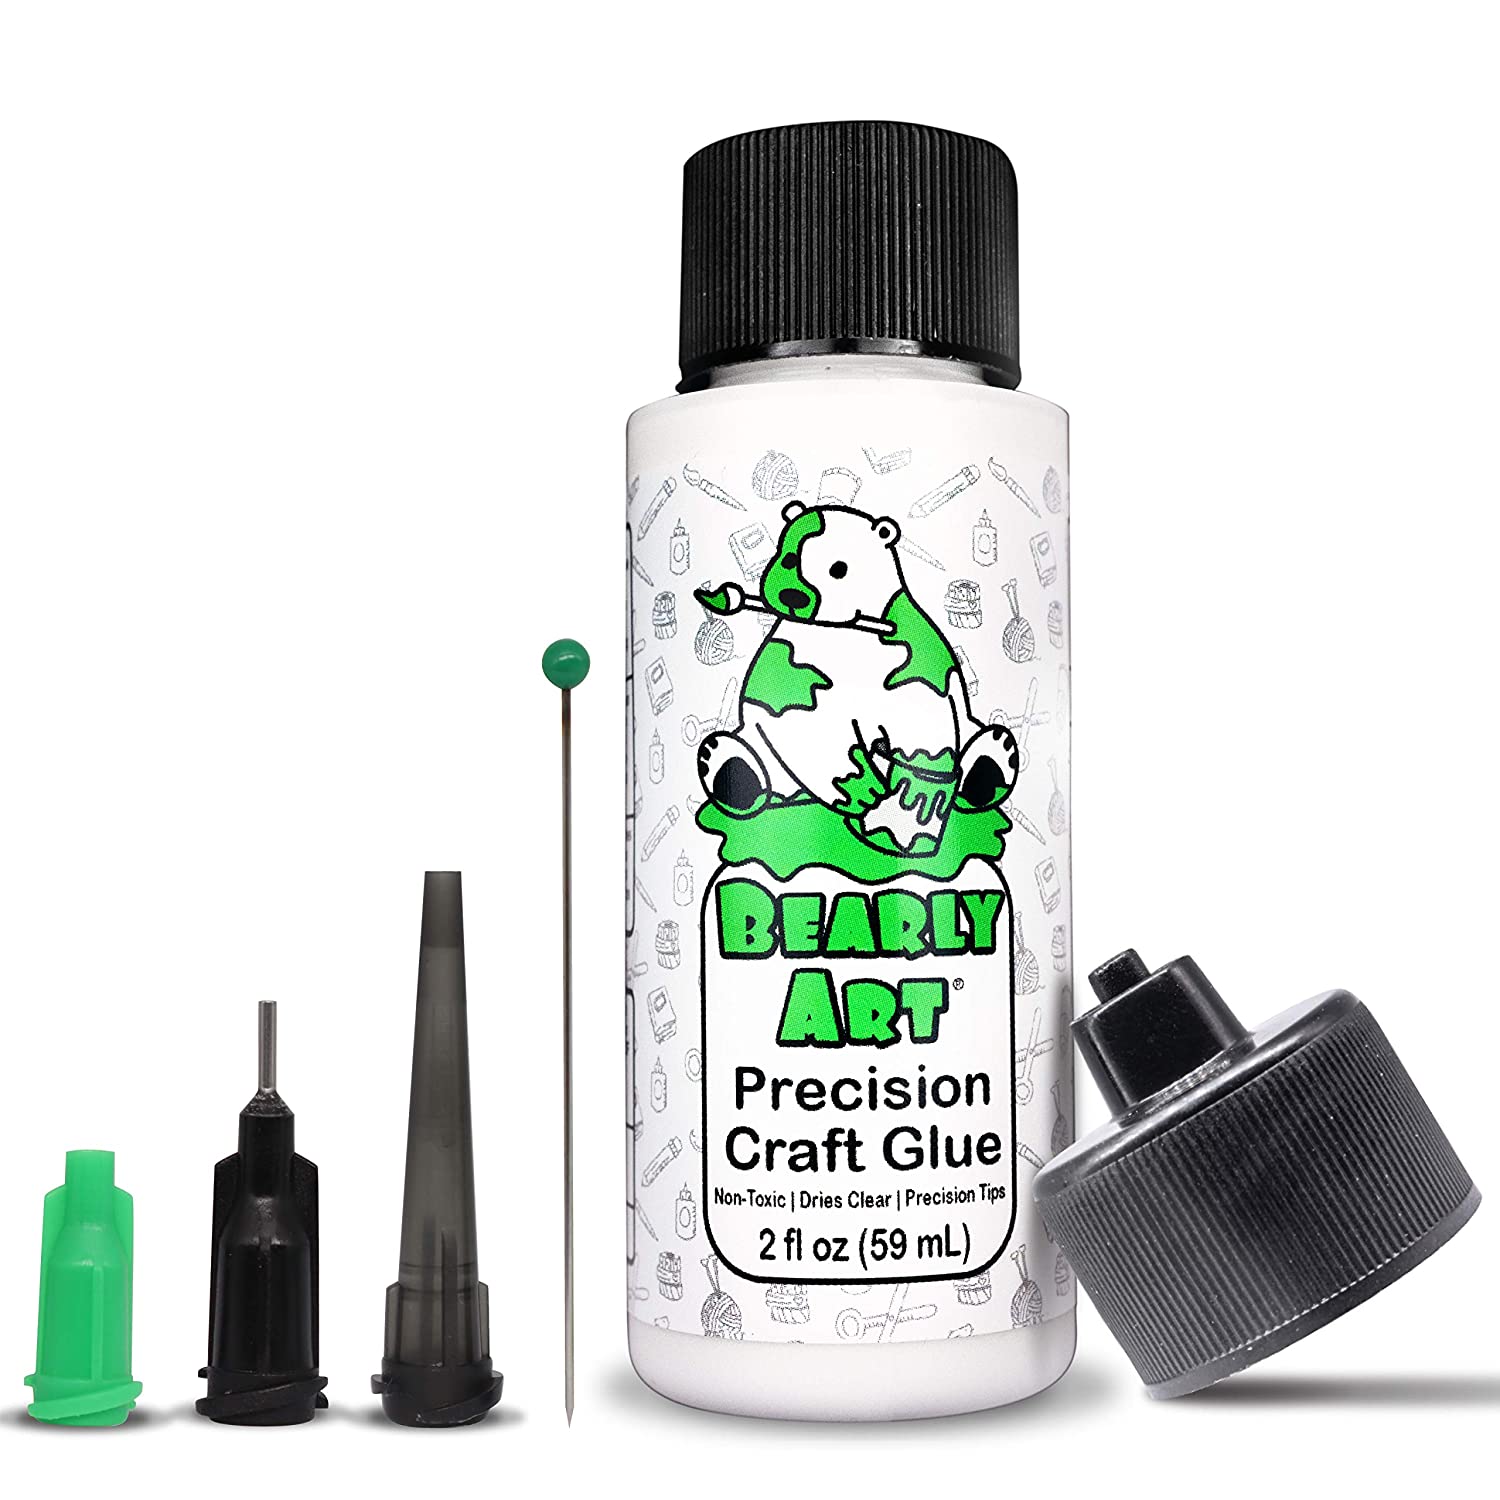 Bearly Art Precision Craft Glue - The Mini - 2fl oz [...]